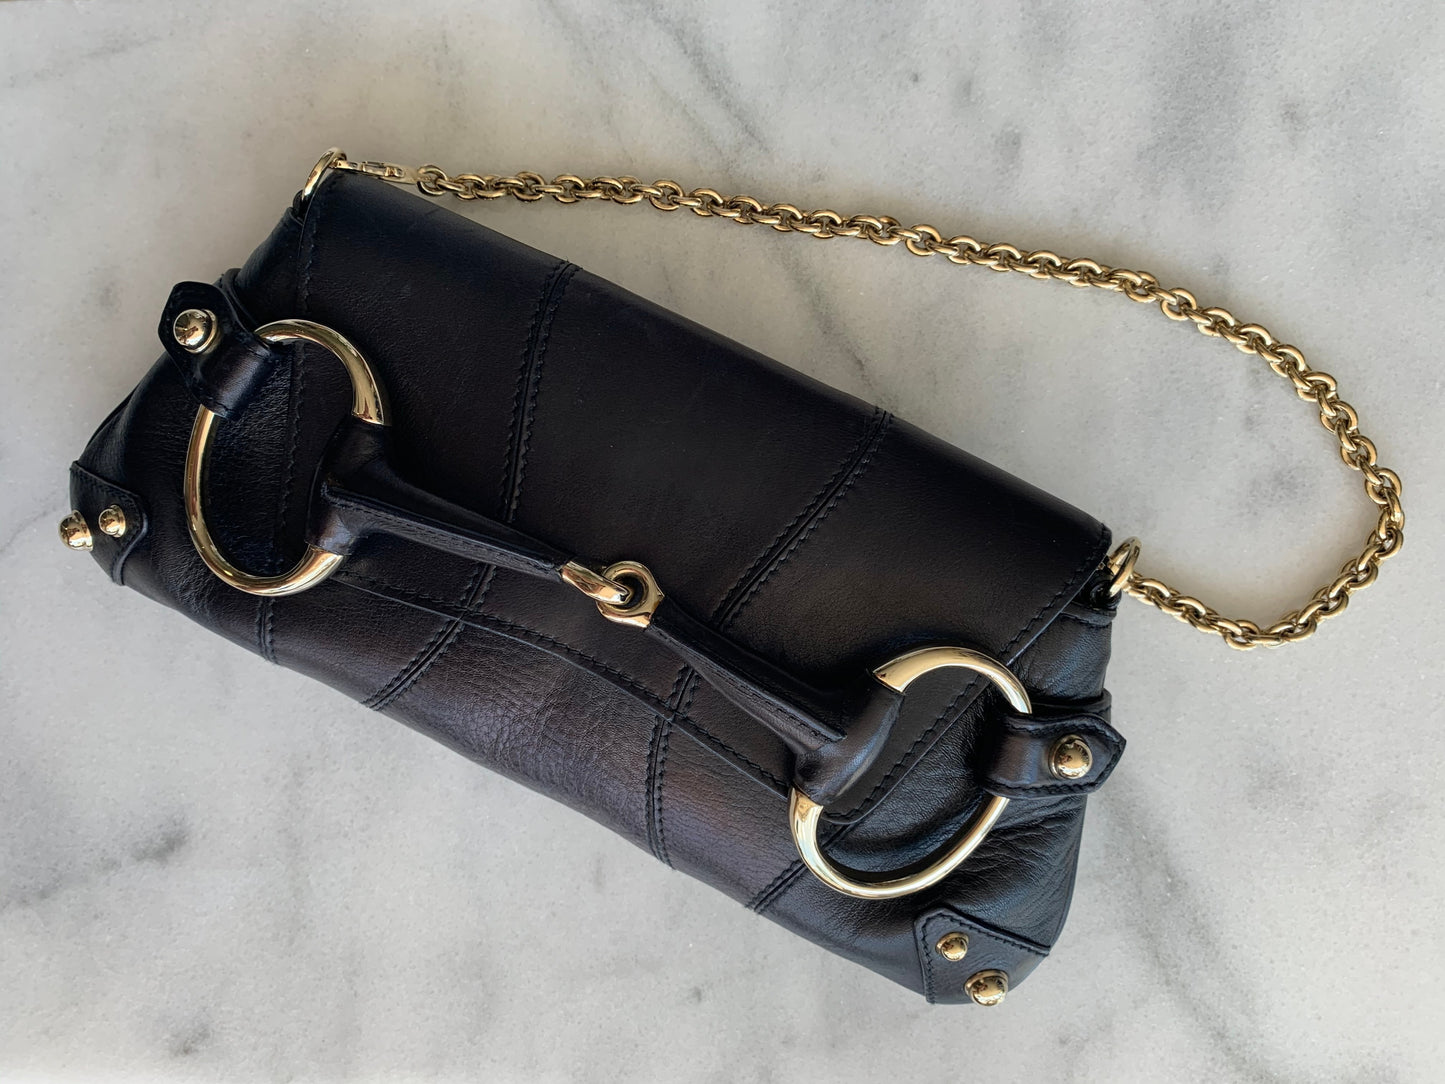 Gucci Horsebit Clutch Chain Bag